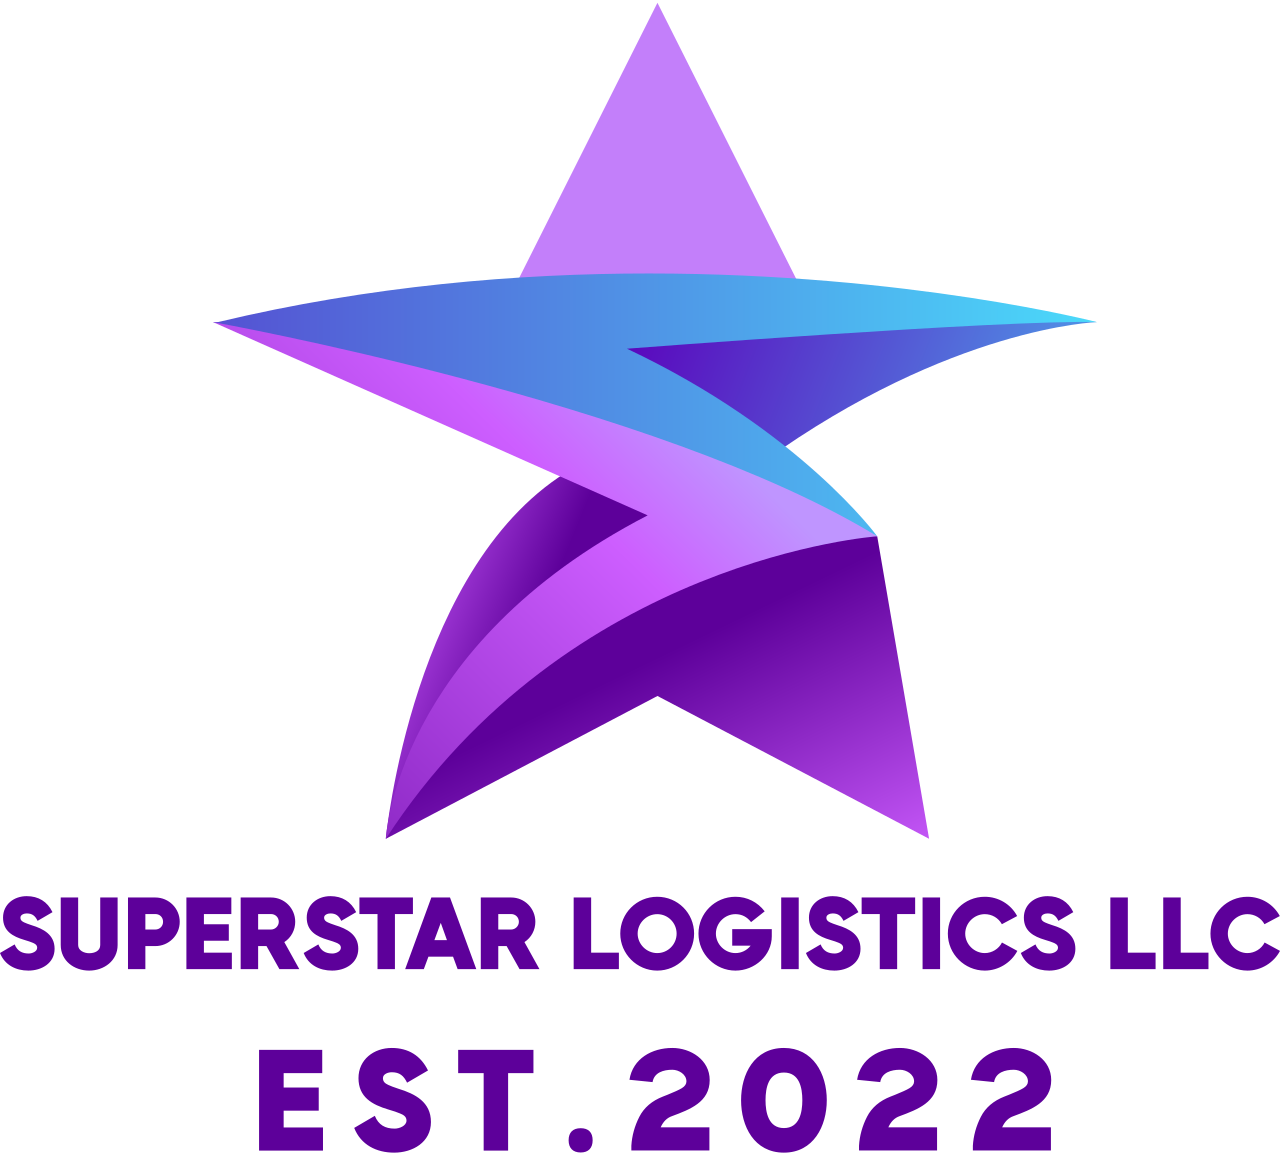 Superstar Logistics LLC 's web page